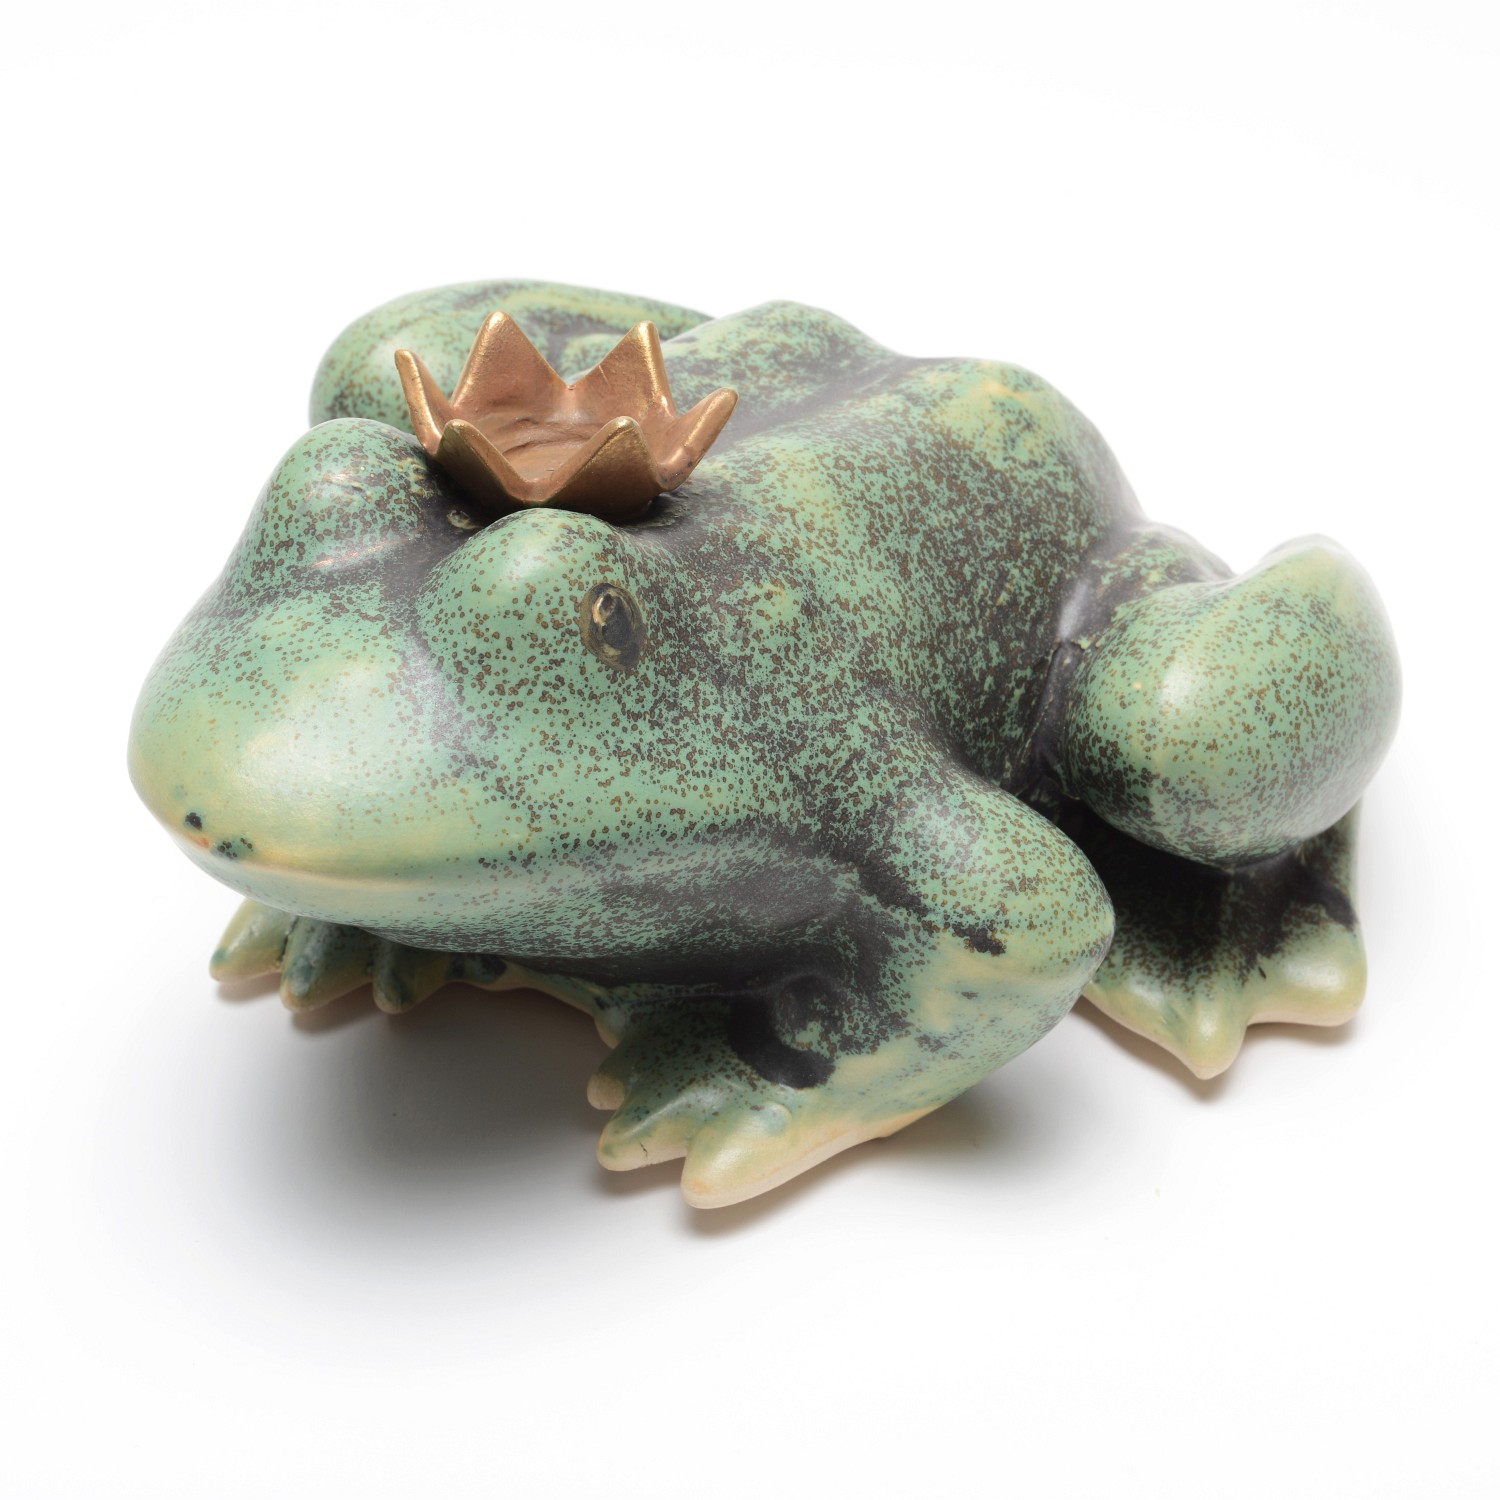 Froschkönig aus Keramik